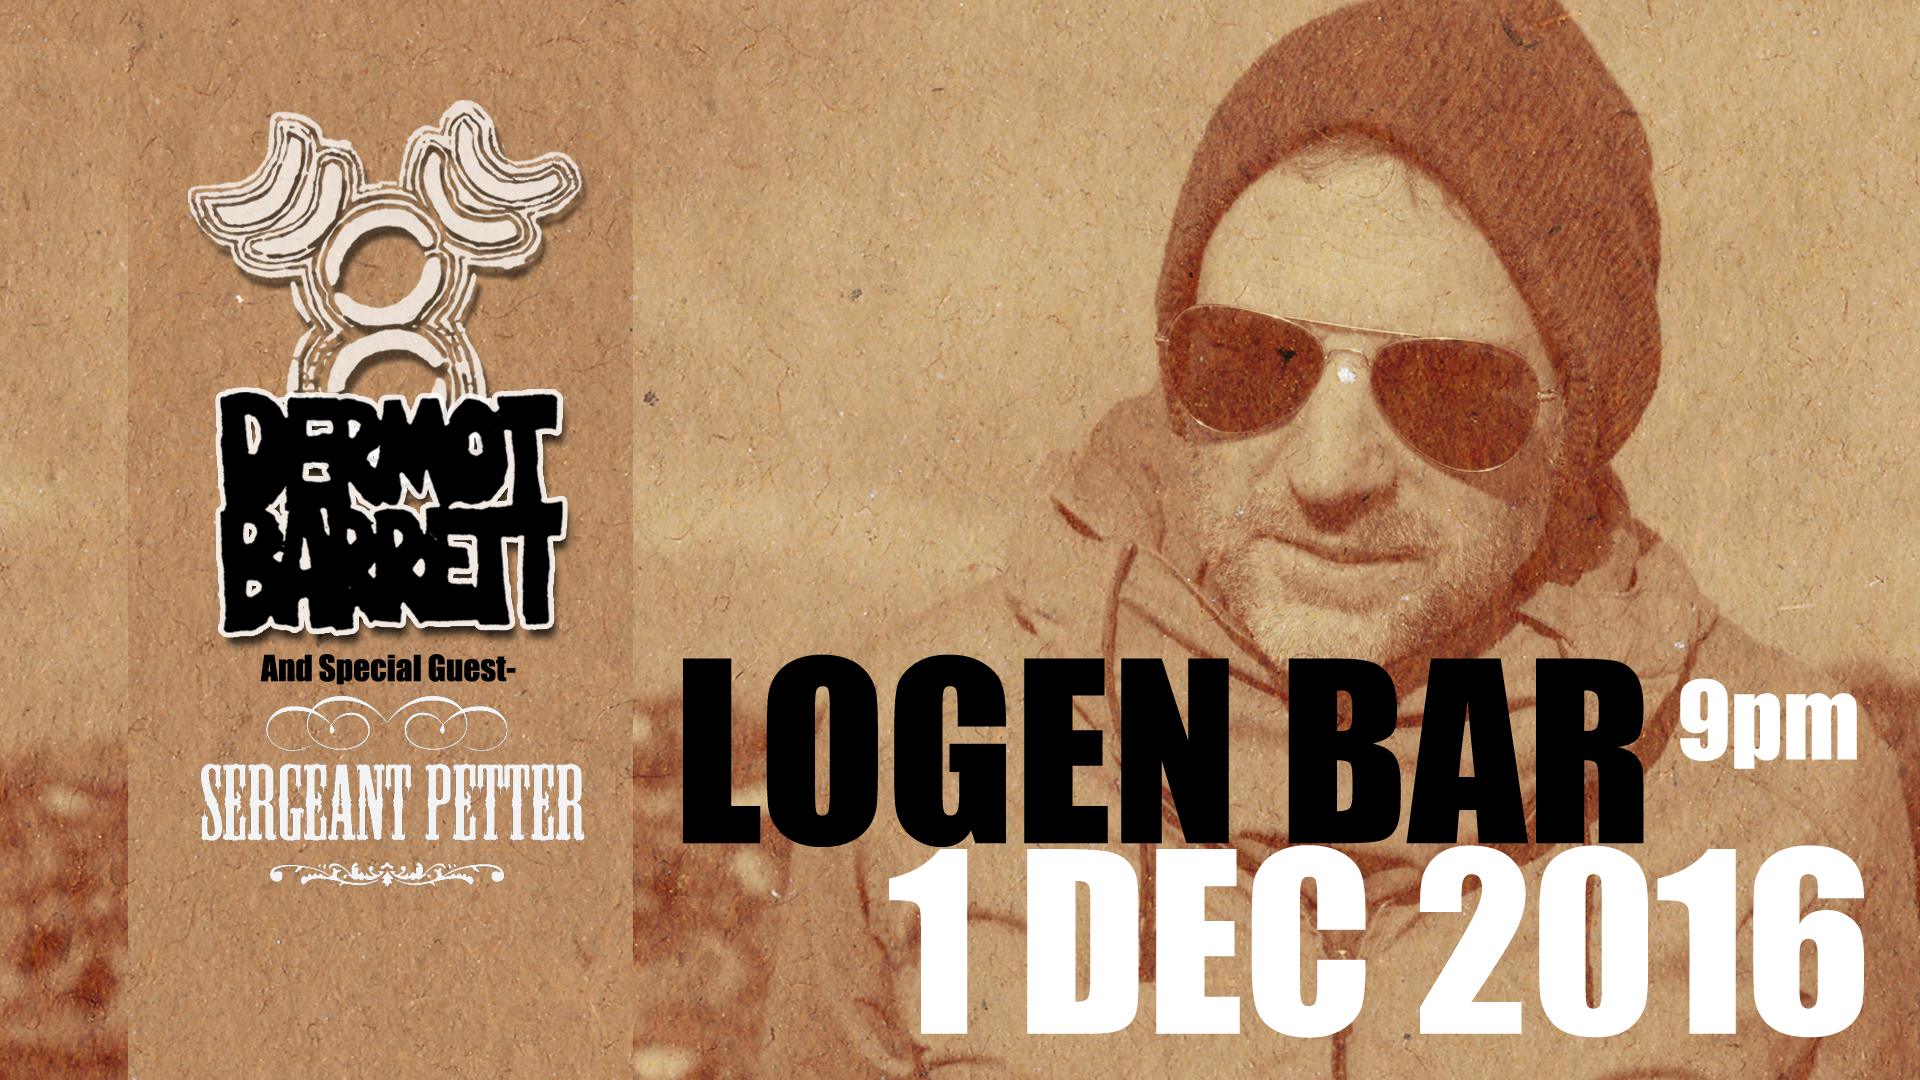 Dermot Barrett and special guest Sergeant Petter at the Logan Bar 1st of December!